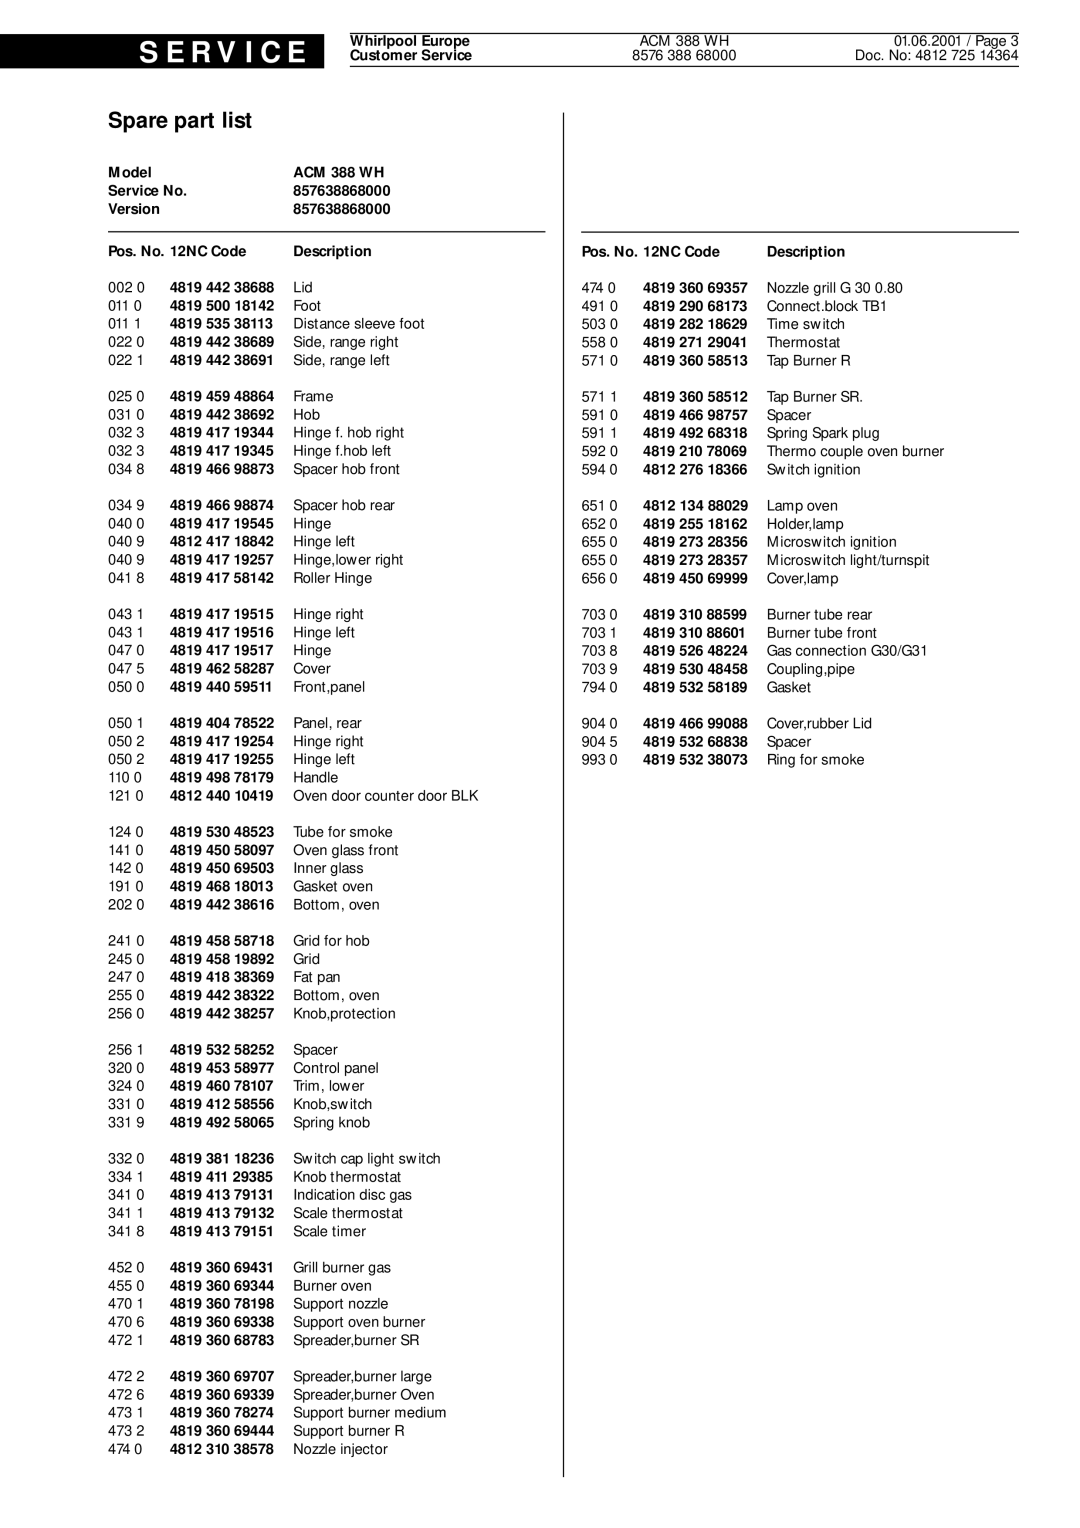 Whirlpool ACM 388 WH service manual Spare part list, S E R V I C E 